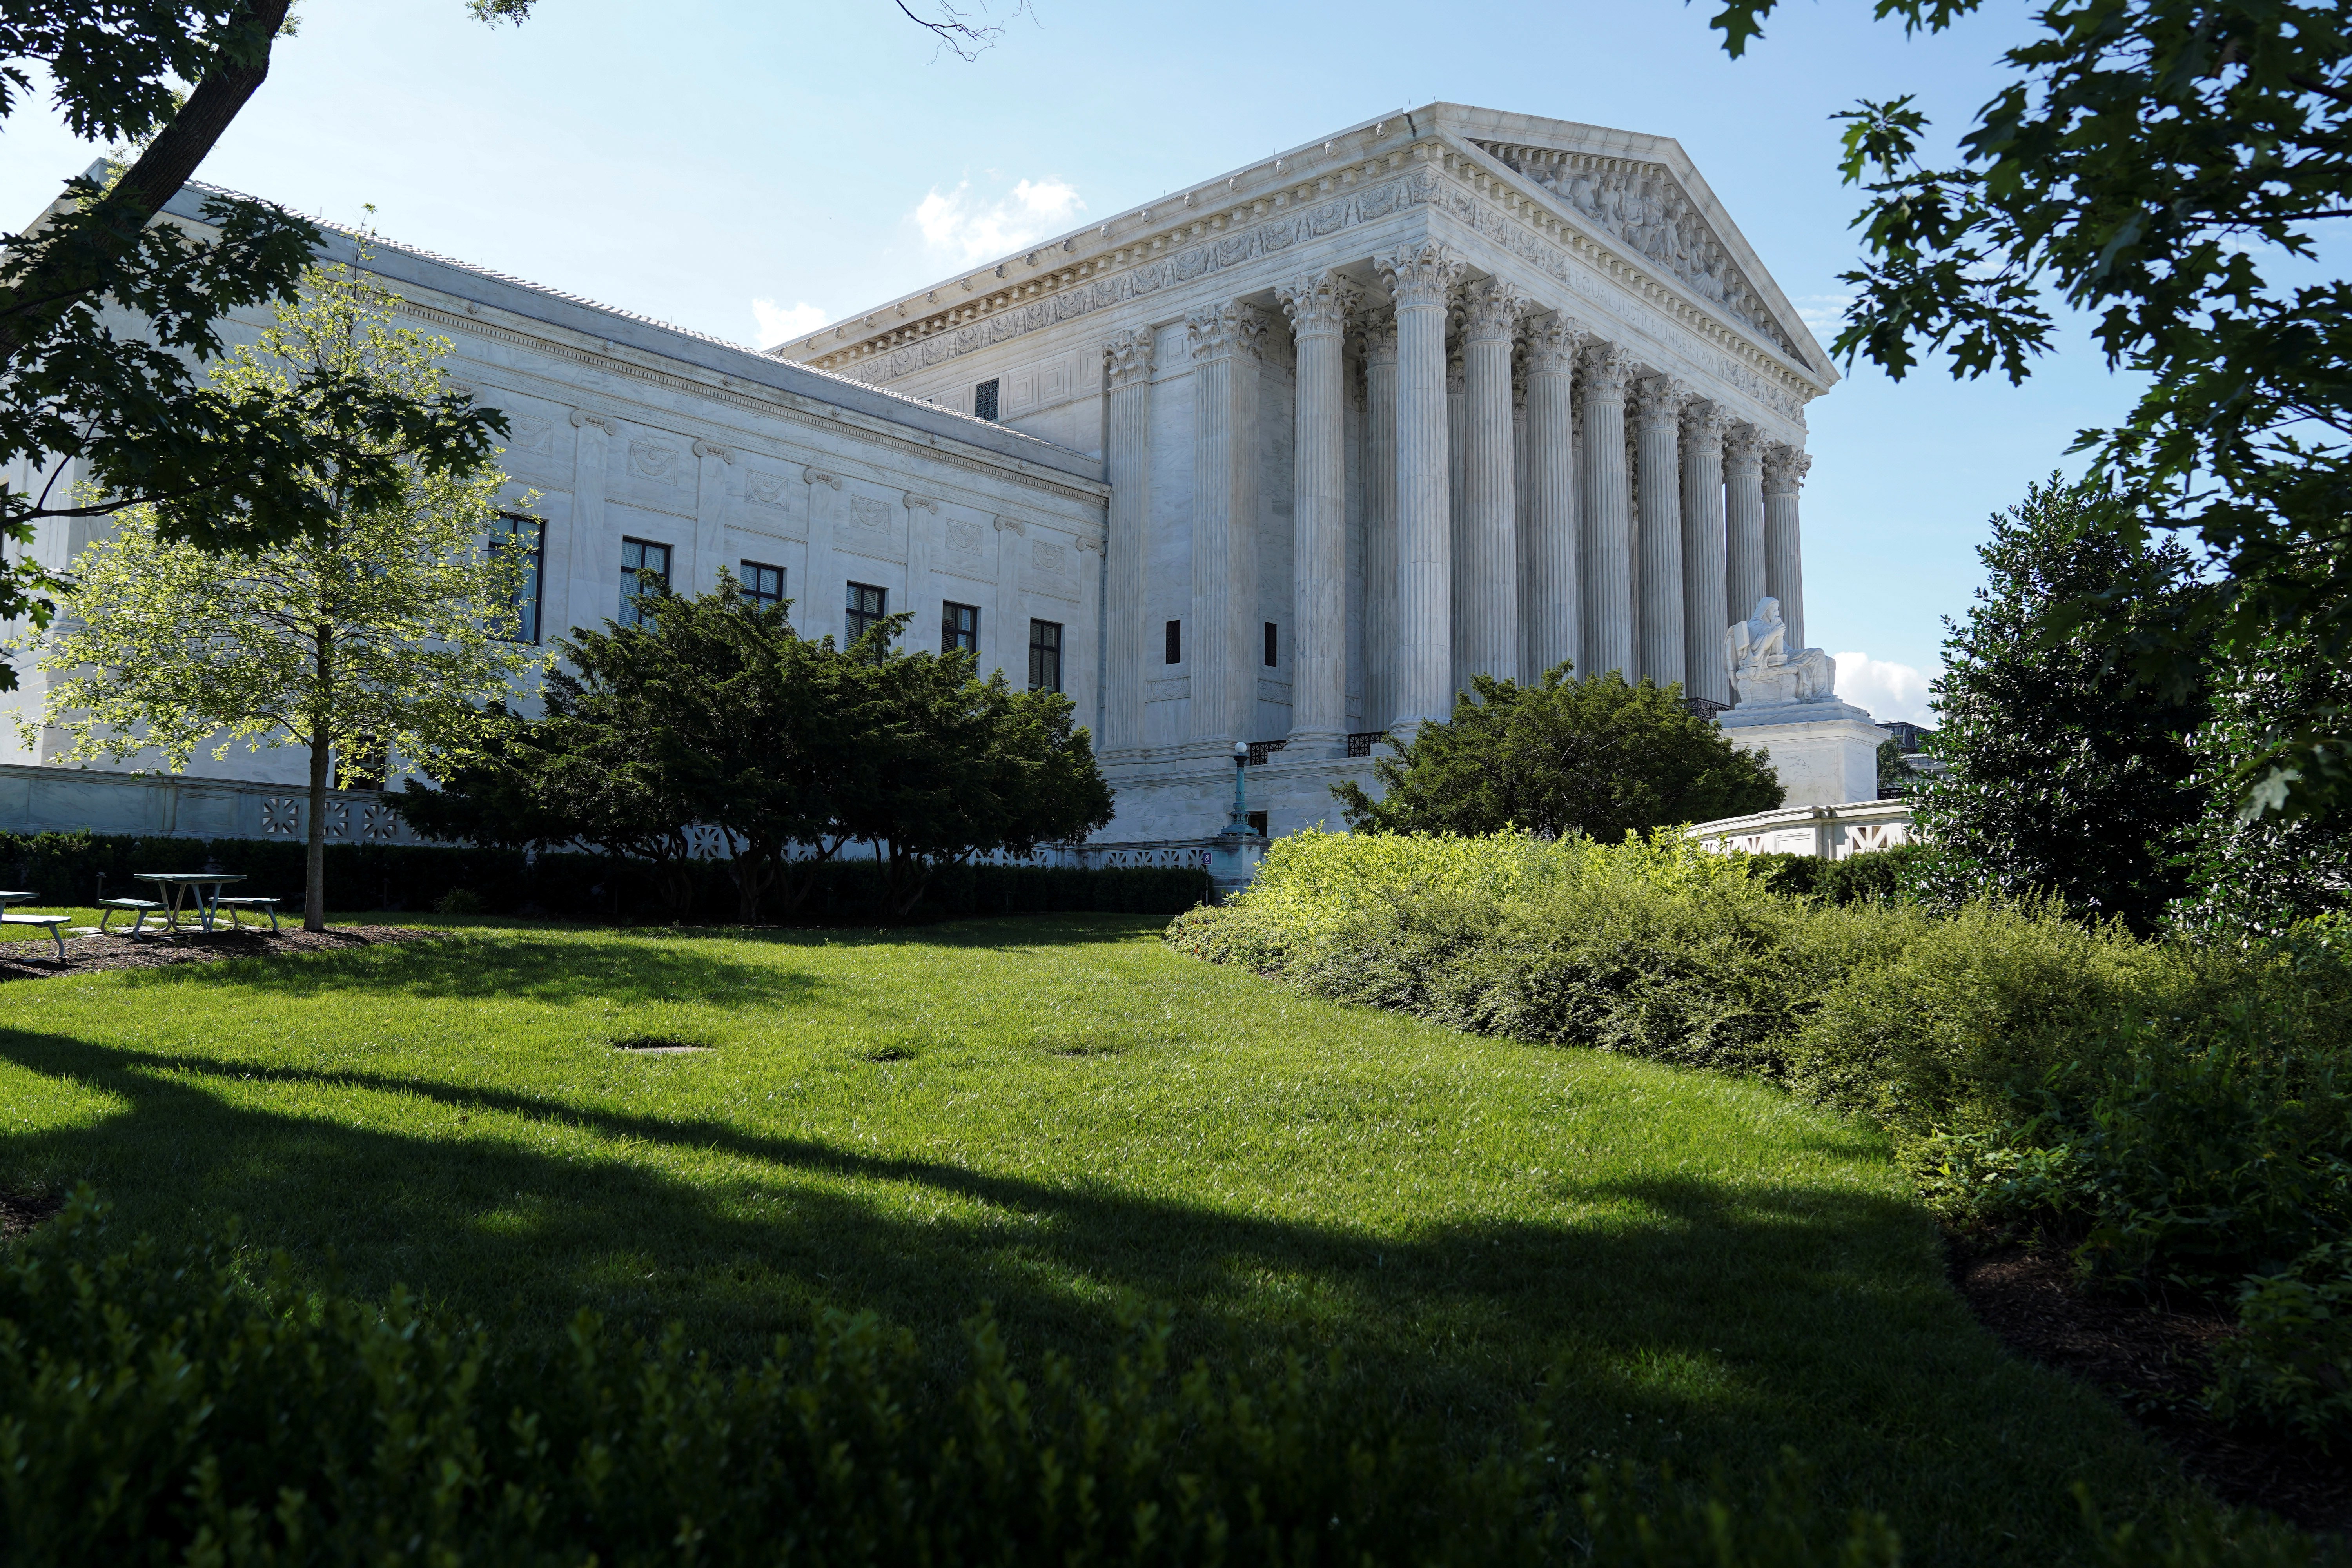 Trees cast shadows outside the U.S. Supreme Court